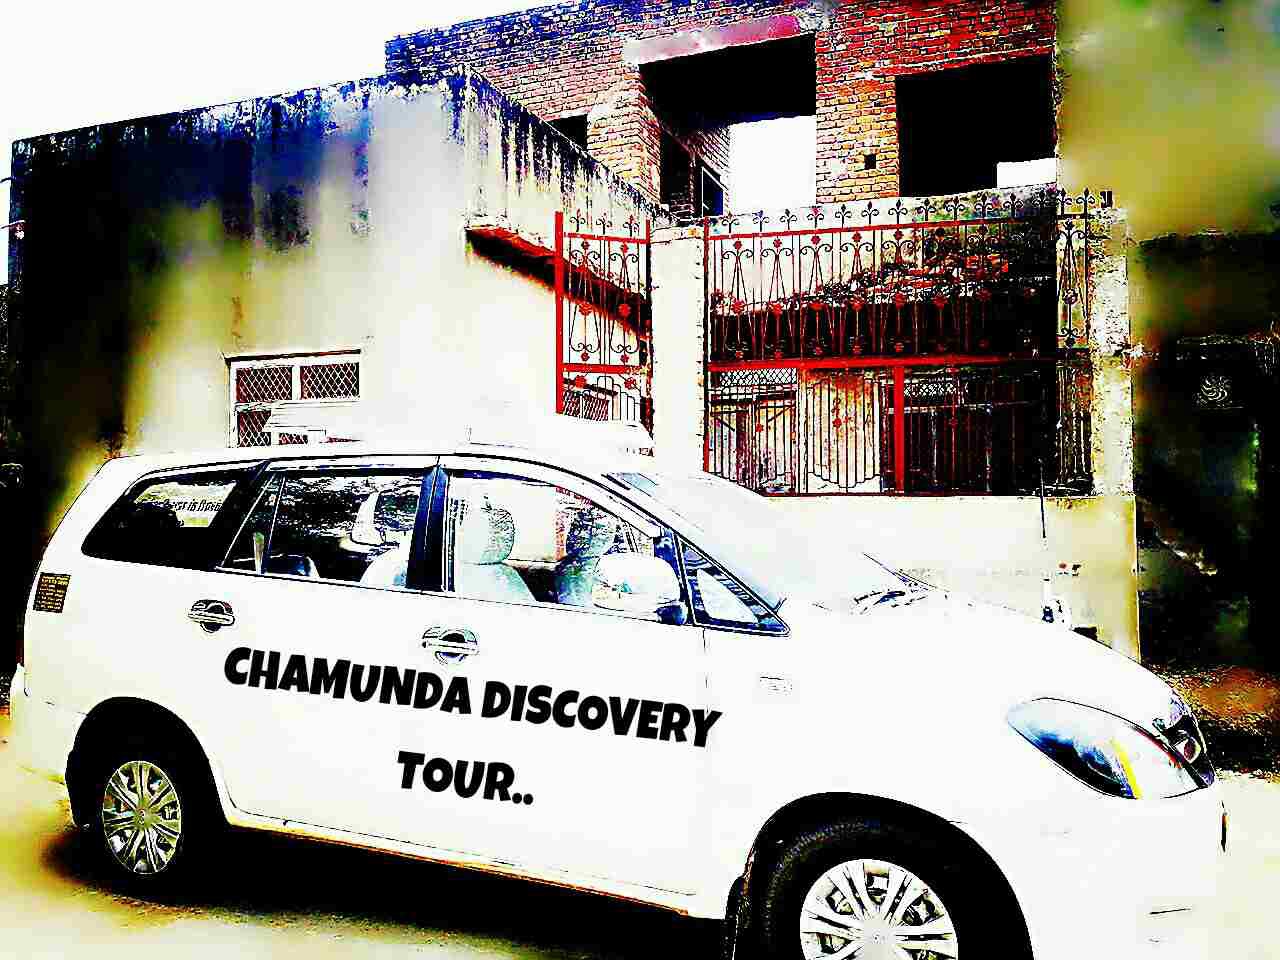 Chamunda tour